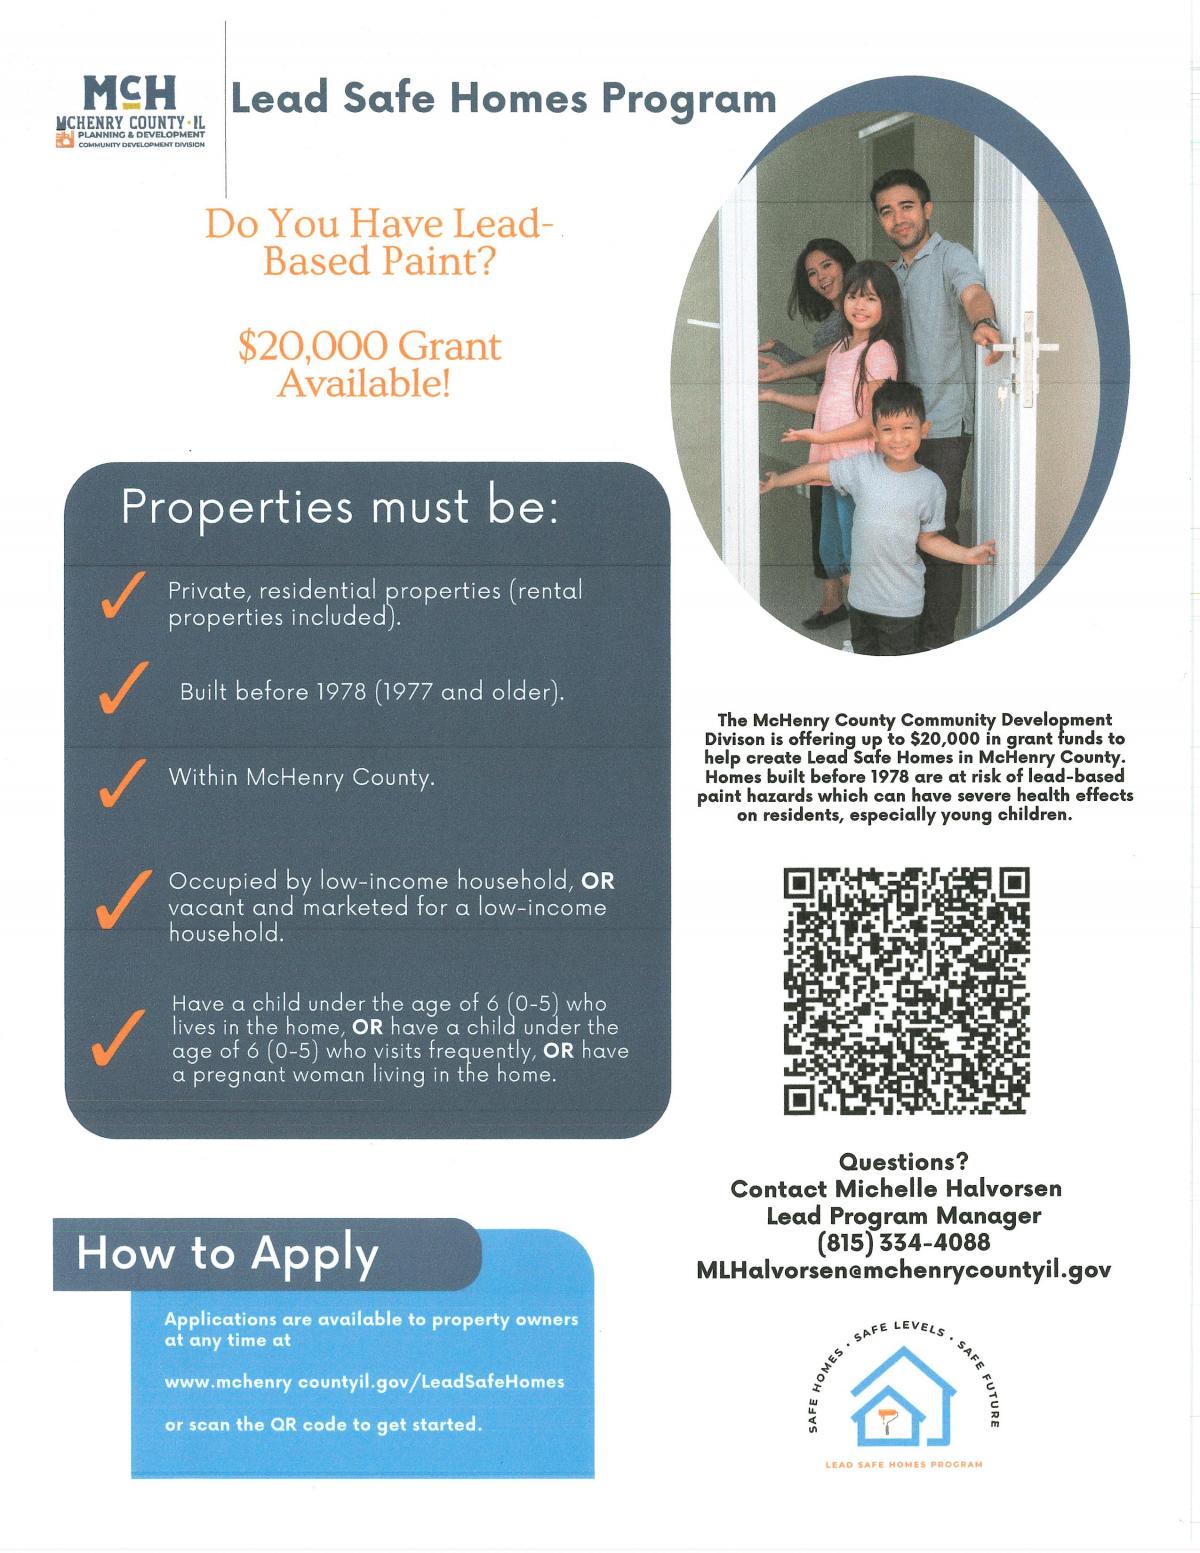 Lead Safe Homes Grant Program